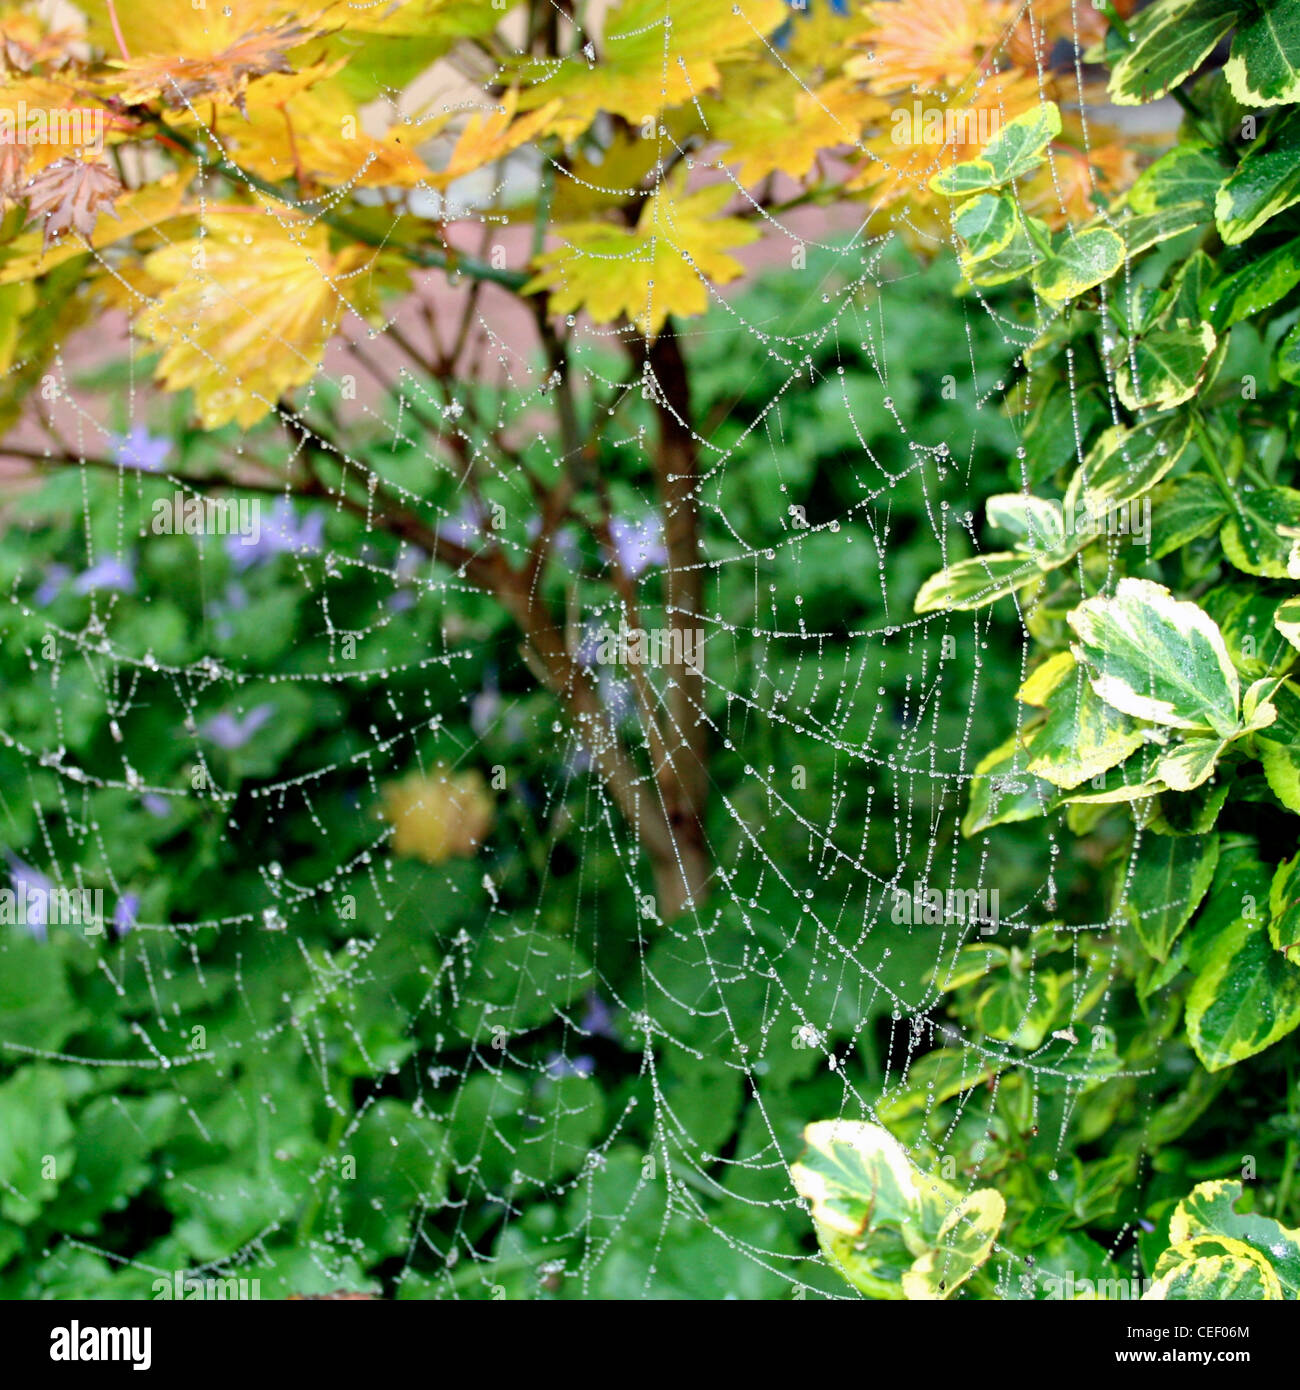 Closeup of a cobweb with waterdrops Stock Photo